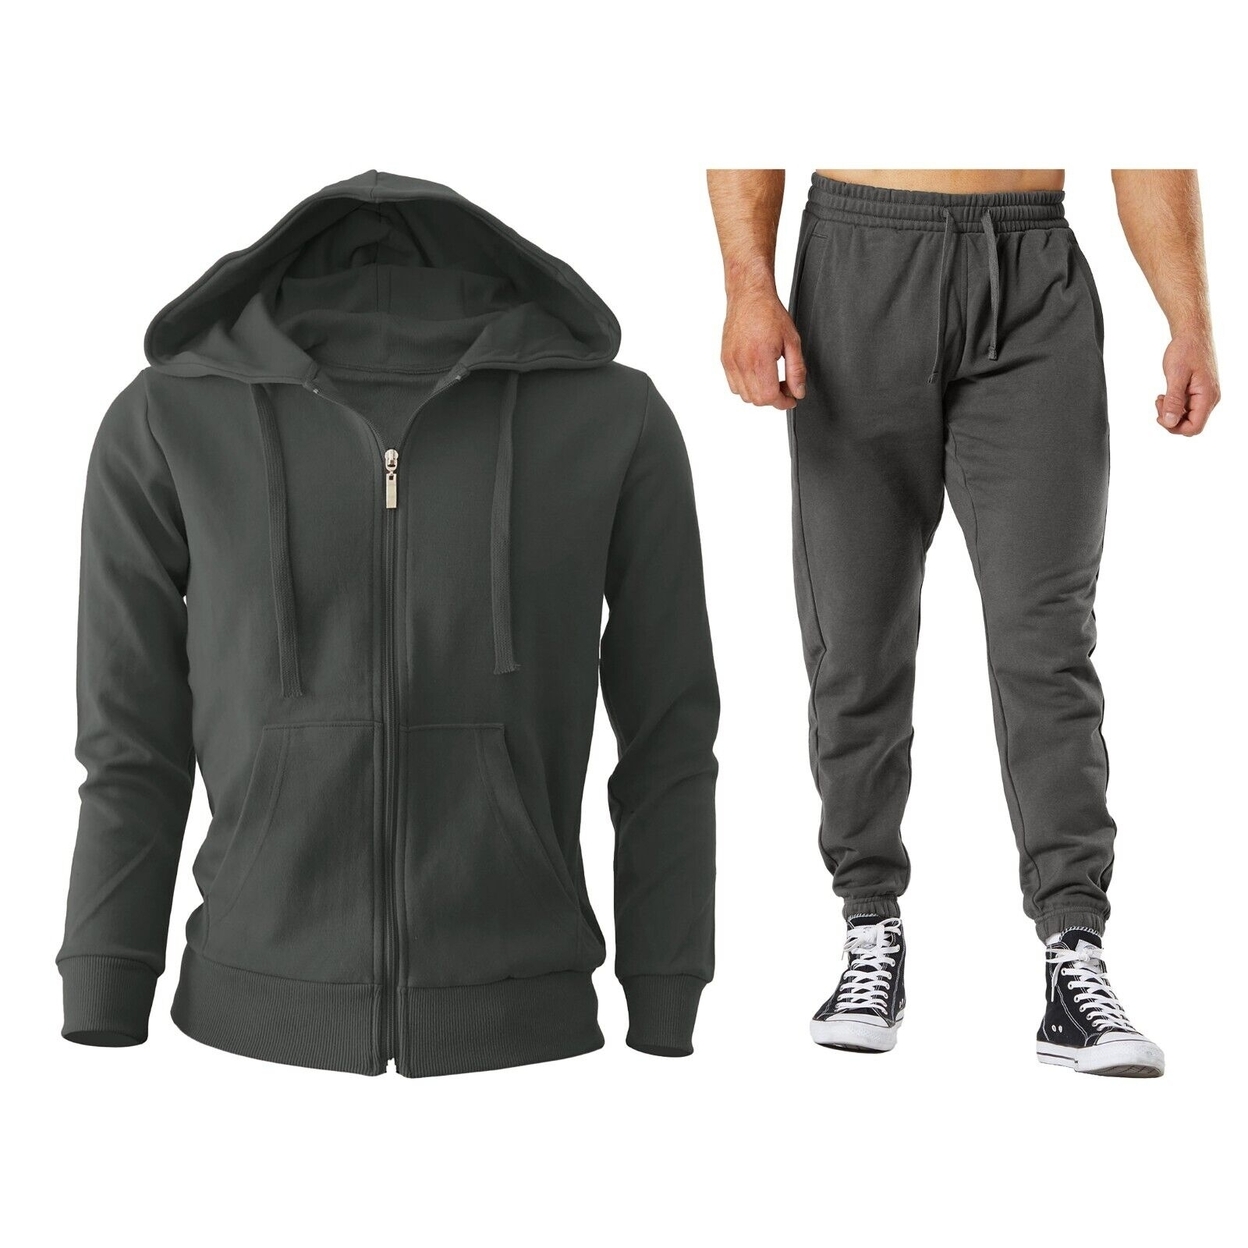 2-Piece: Men's Winter Warm Cozy Athletic Multi-Pockets BIG & TALL Sweatsuit Set - Charcoal, X-large